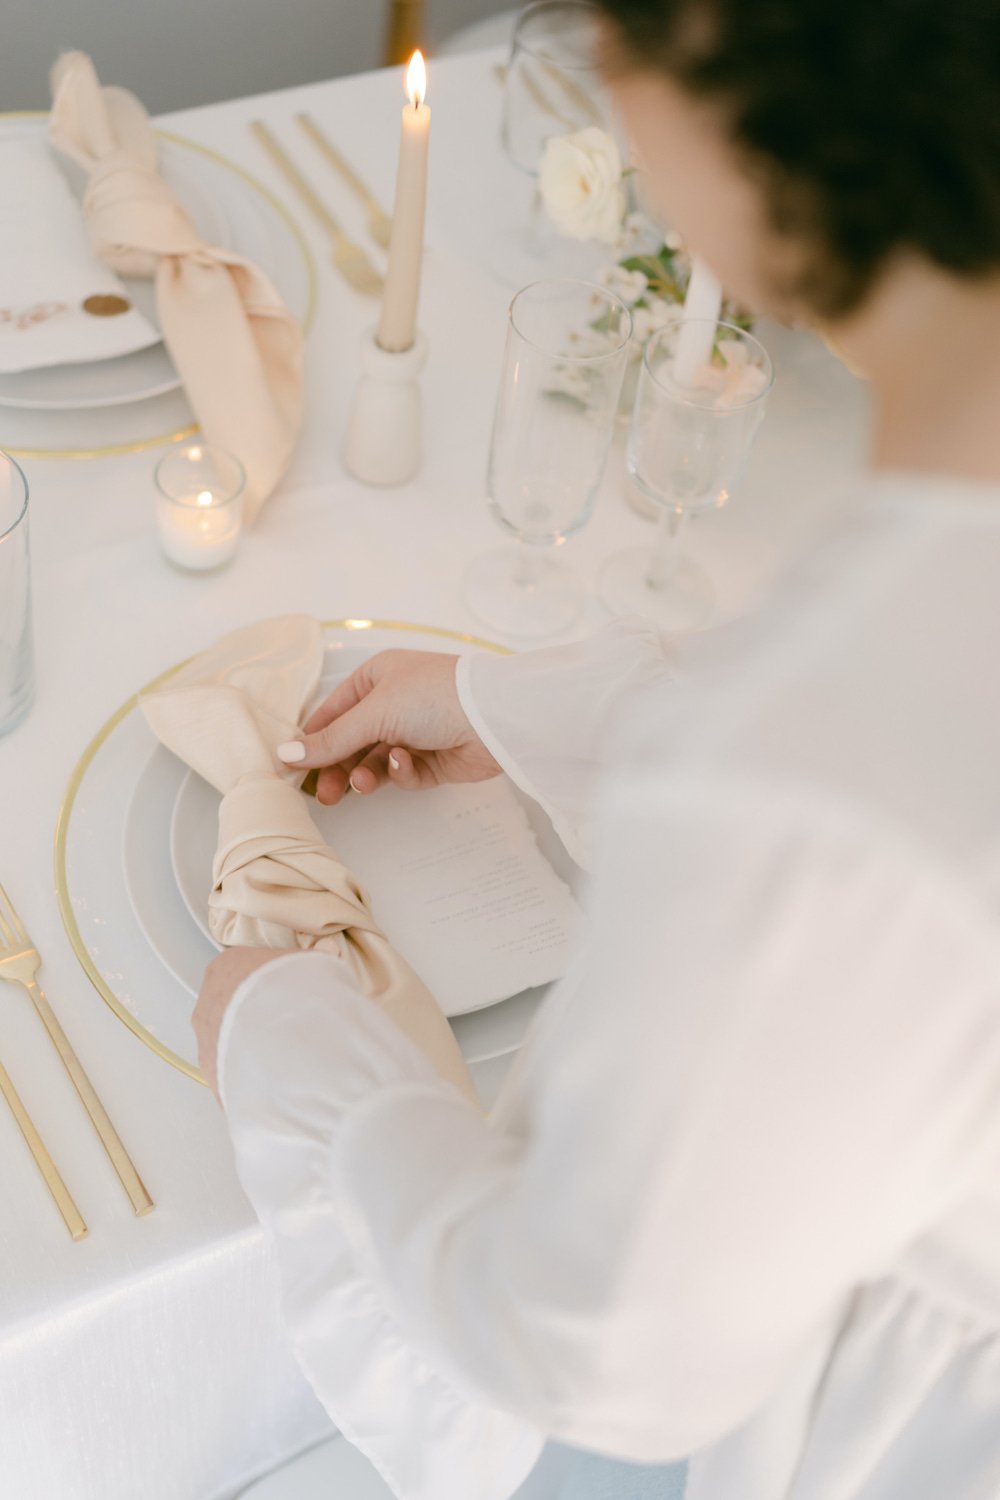 Wedding planner adjusting tied table napkins for the reception